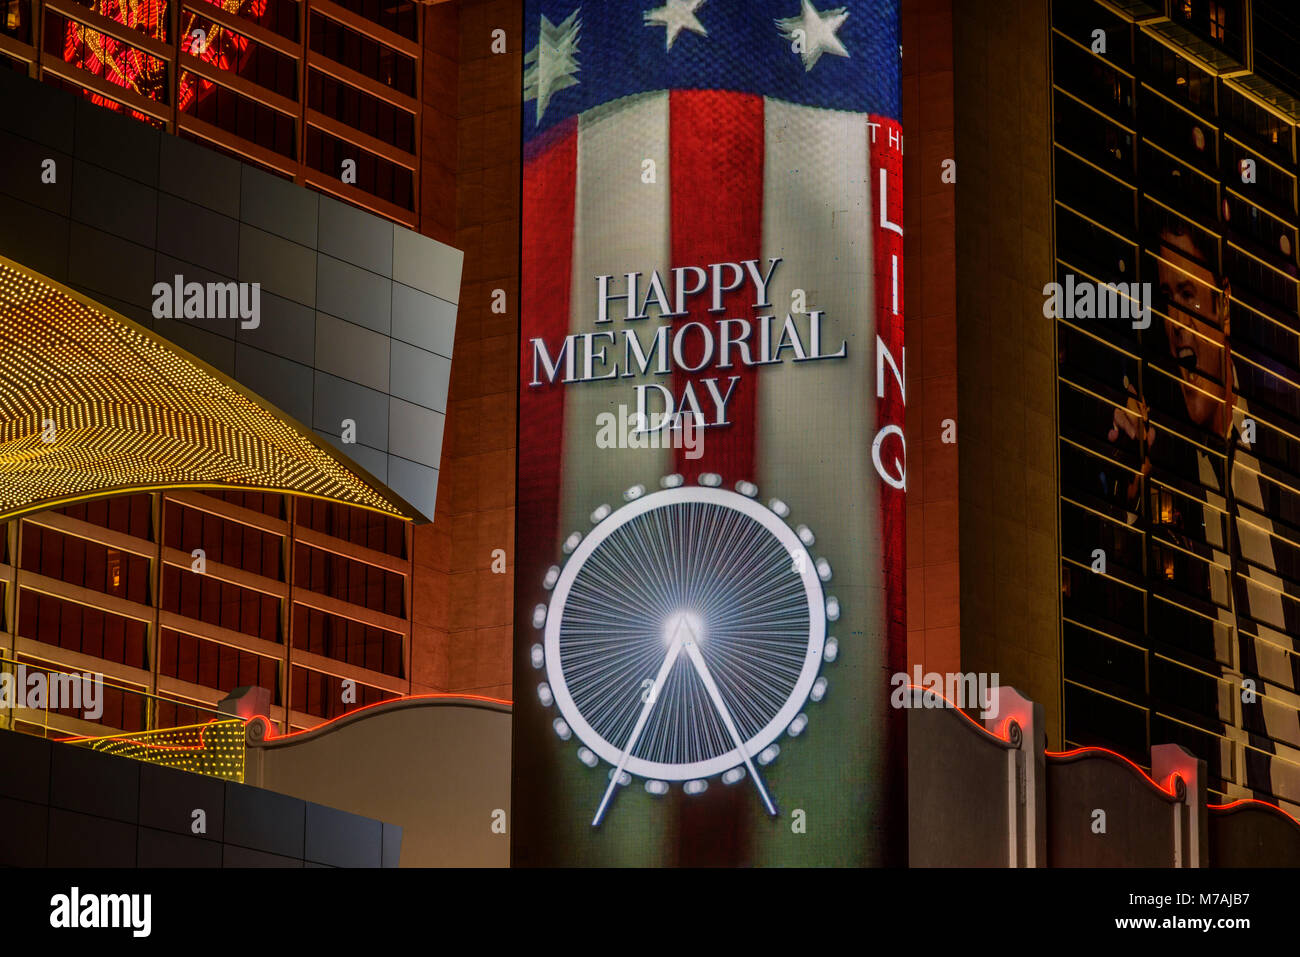 The USA, Nevada, Clark County, Las Vegas, Las Vegas Boulevard, The Strip, The Linq, Memorial Day advertisement Stock Photo